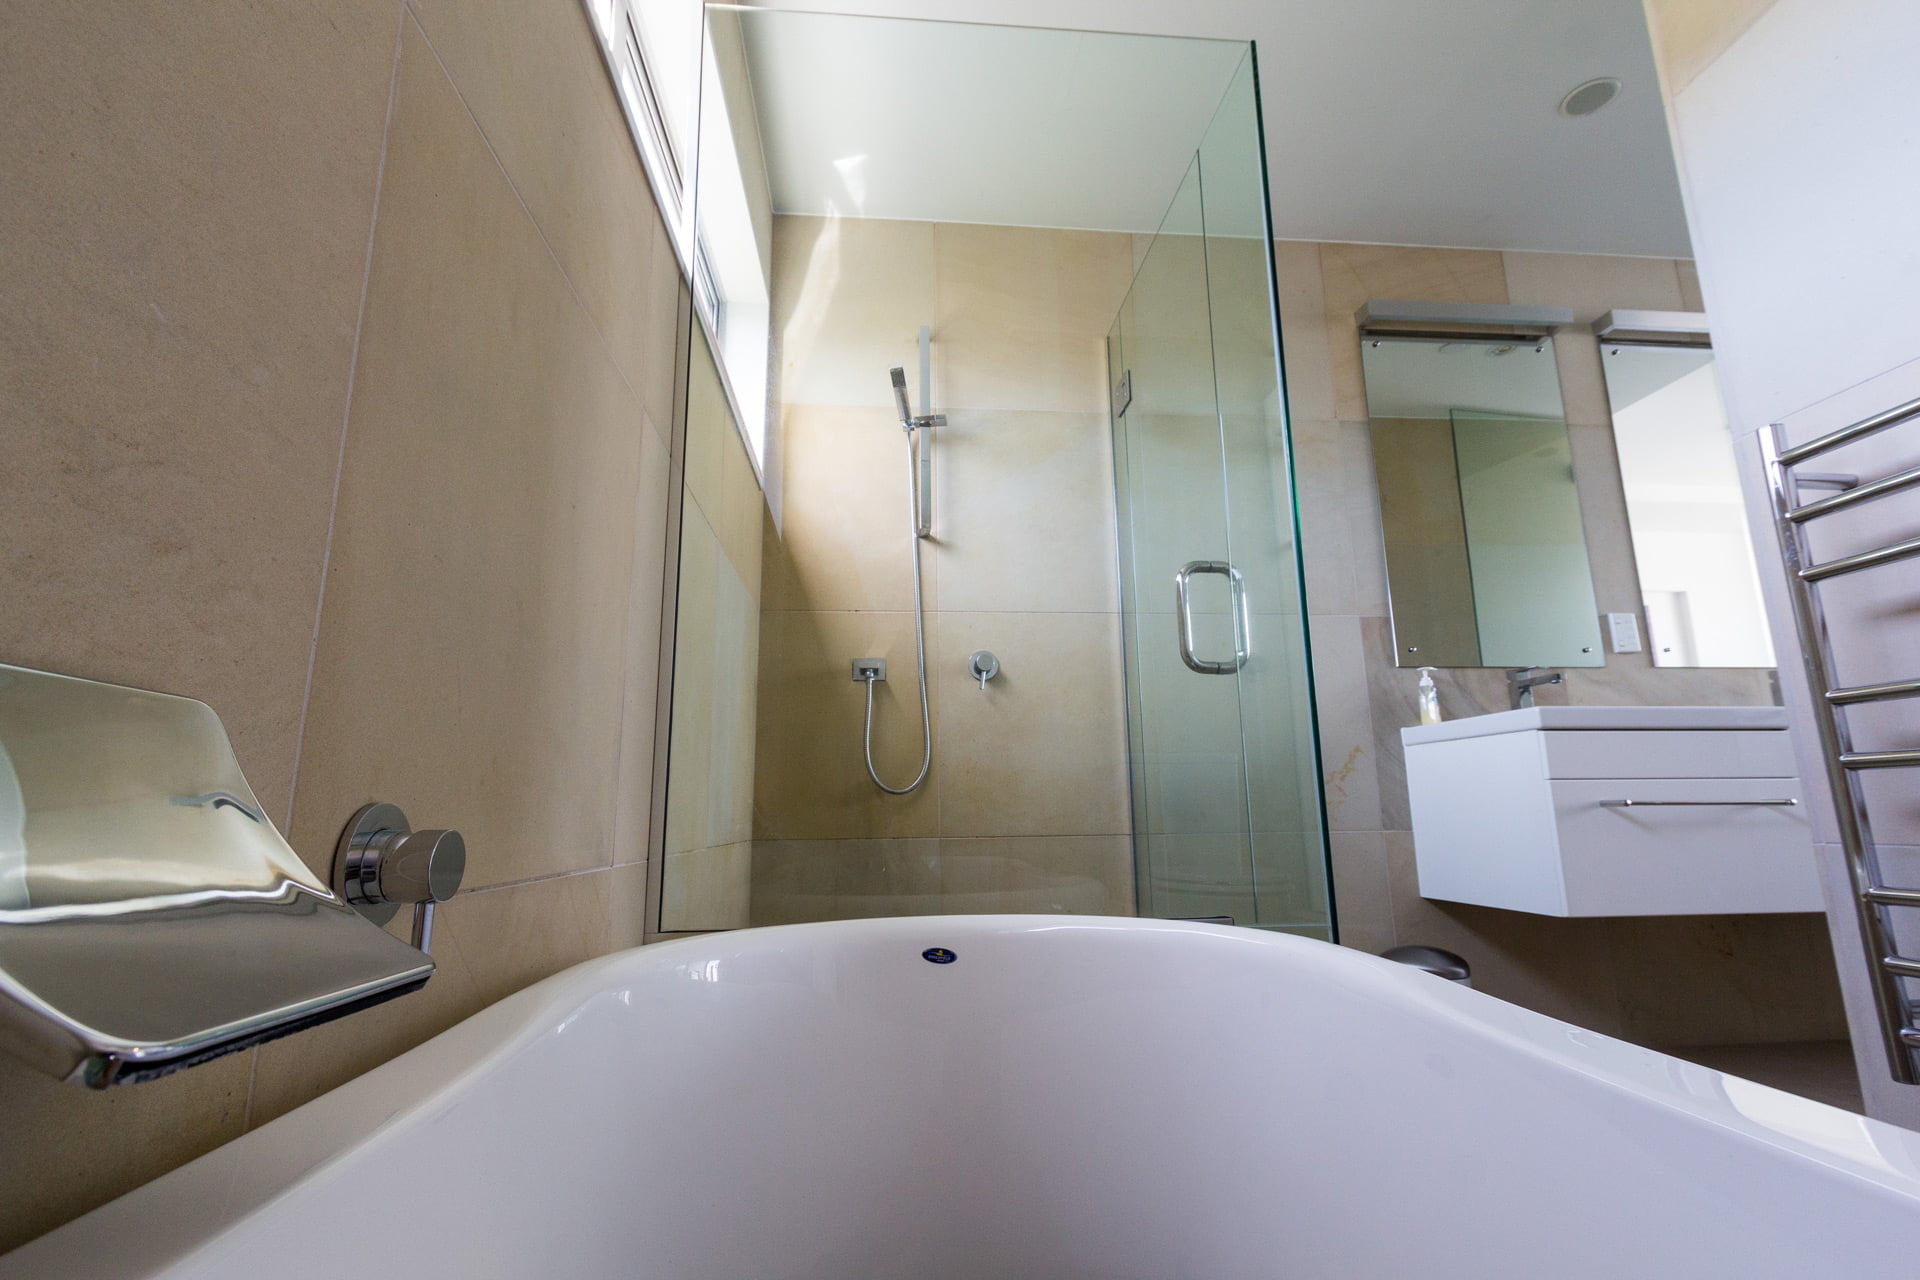 penthouse suite bath and shower